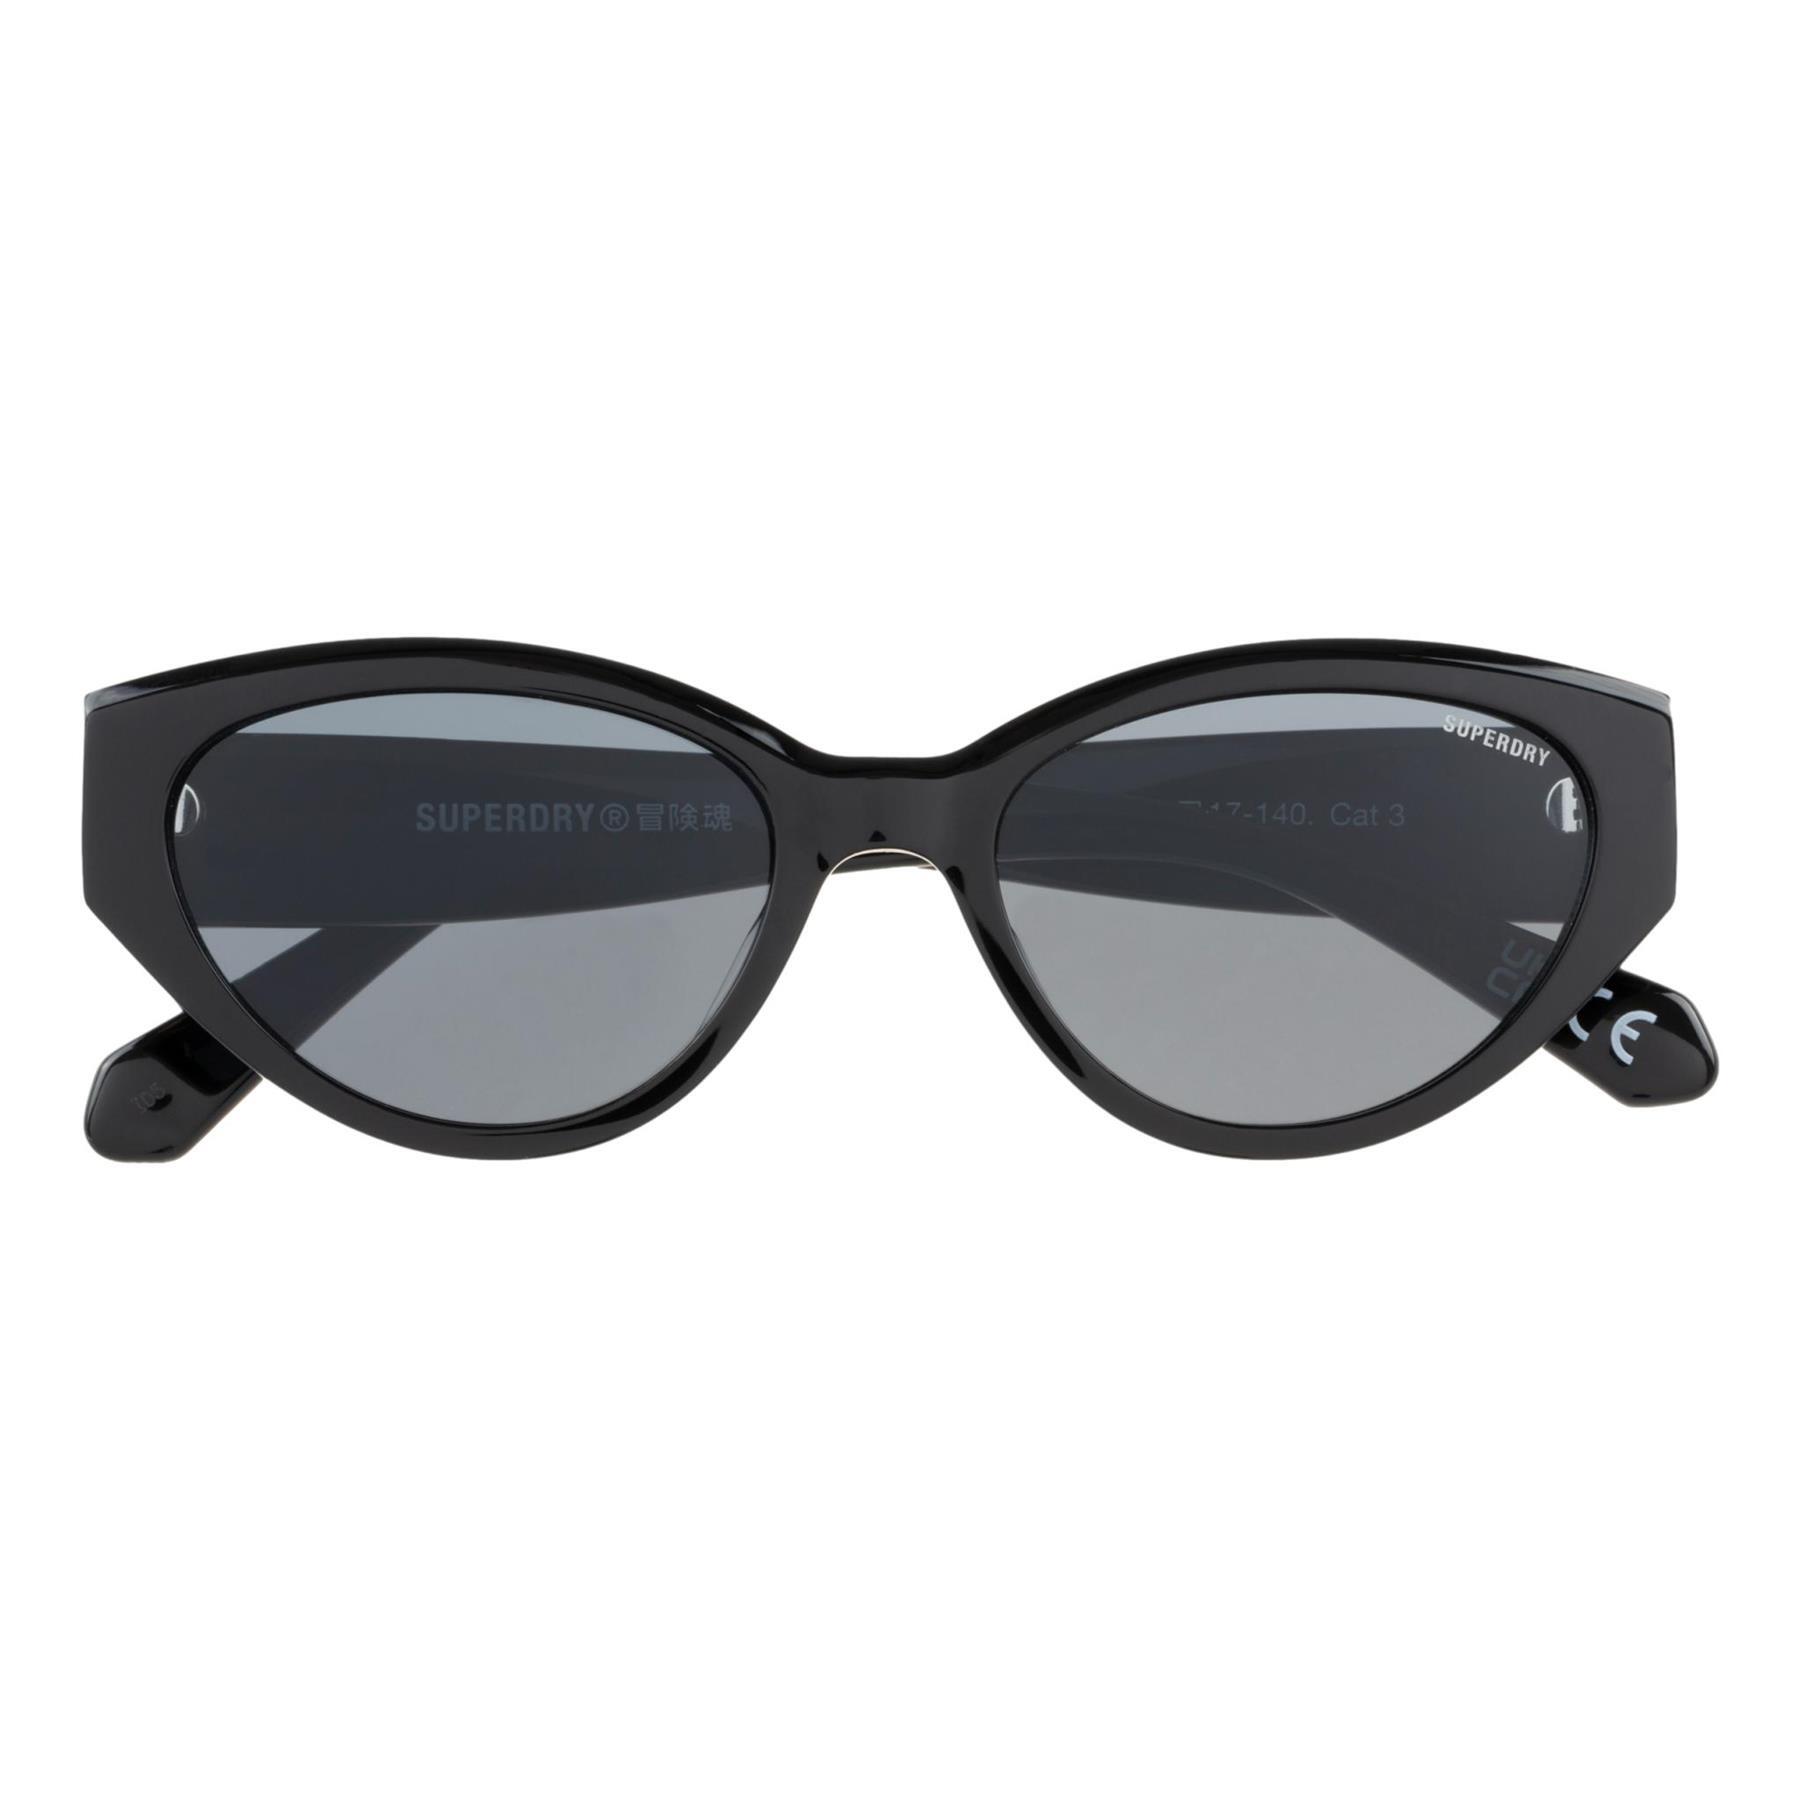 Superdry 5013 Sunglasses - Shiny Black 2/2